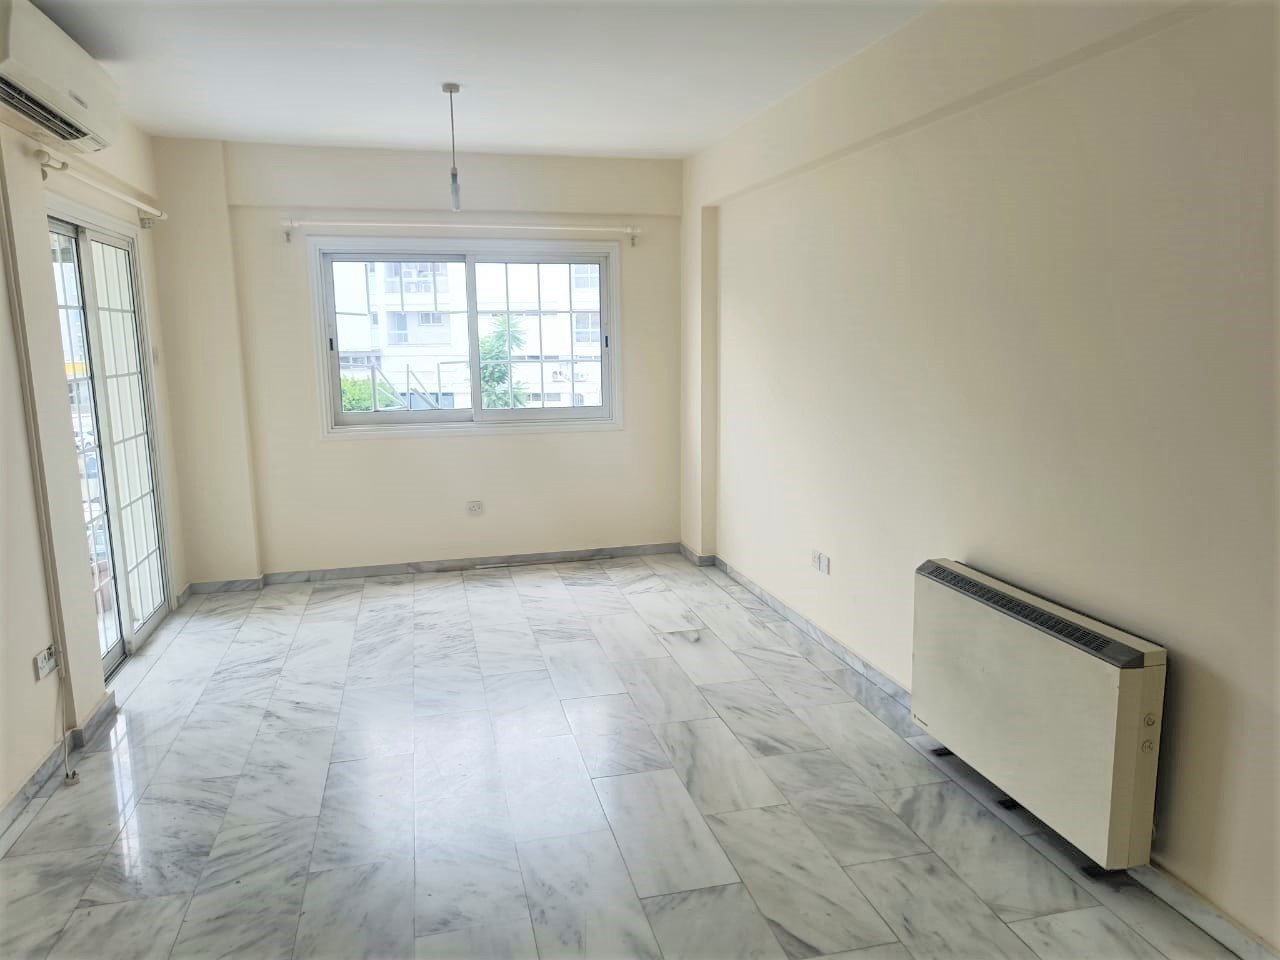 For Rent: Apartments, Engomi, Nicosia, Cyprus FC-38880 - #2